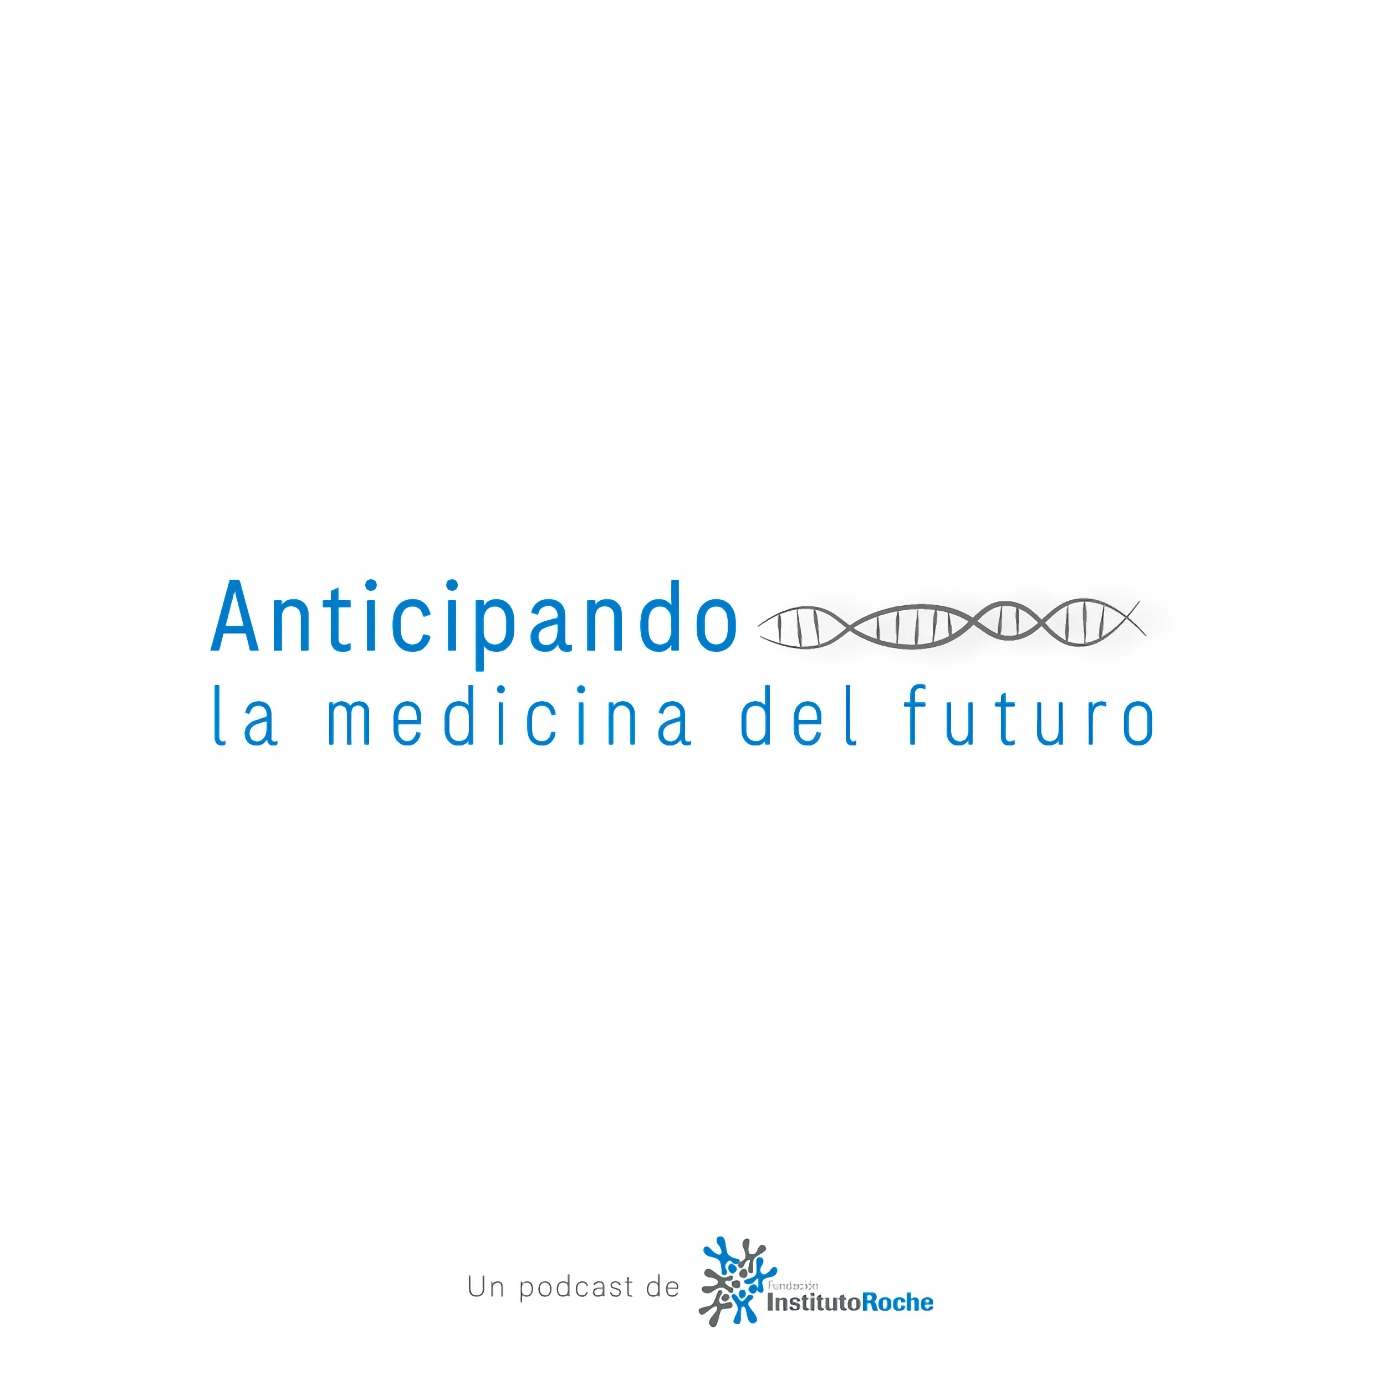 Anticipando la medicina del futuro